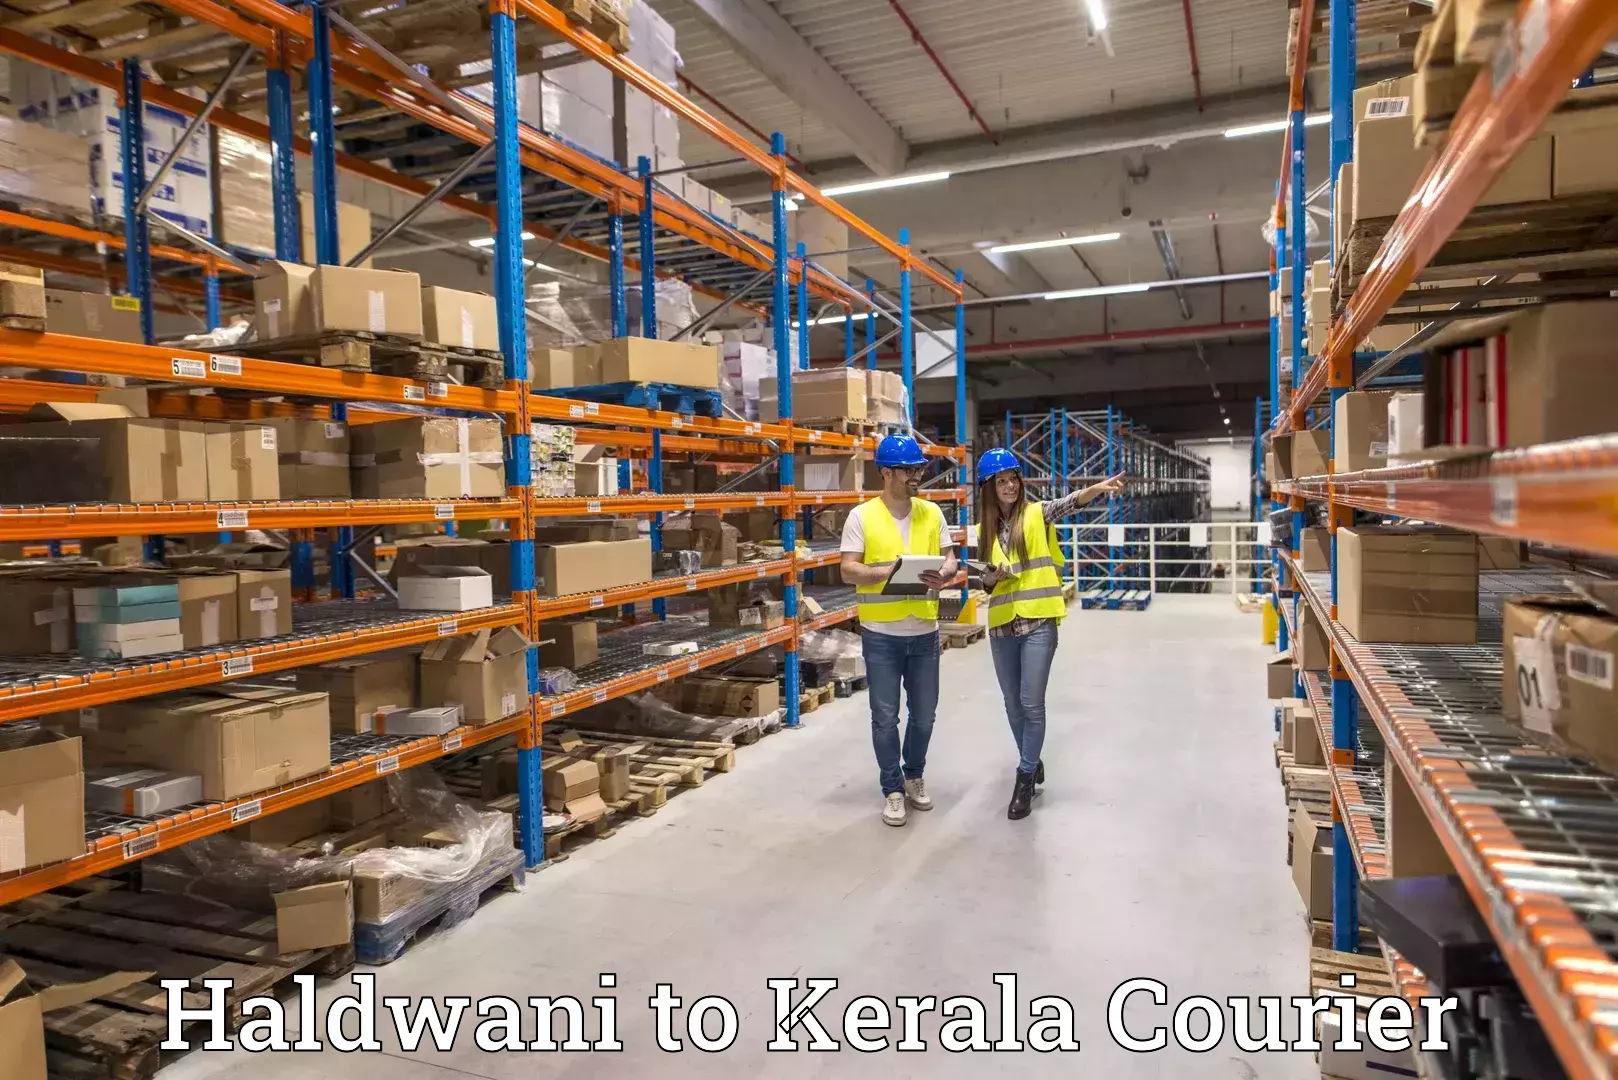 Courier service comparison Haldwani to Tirurangadi